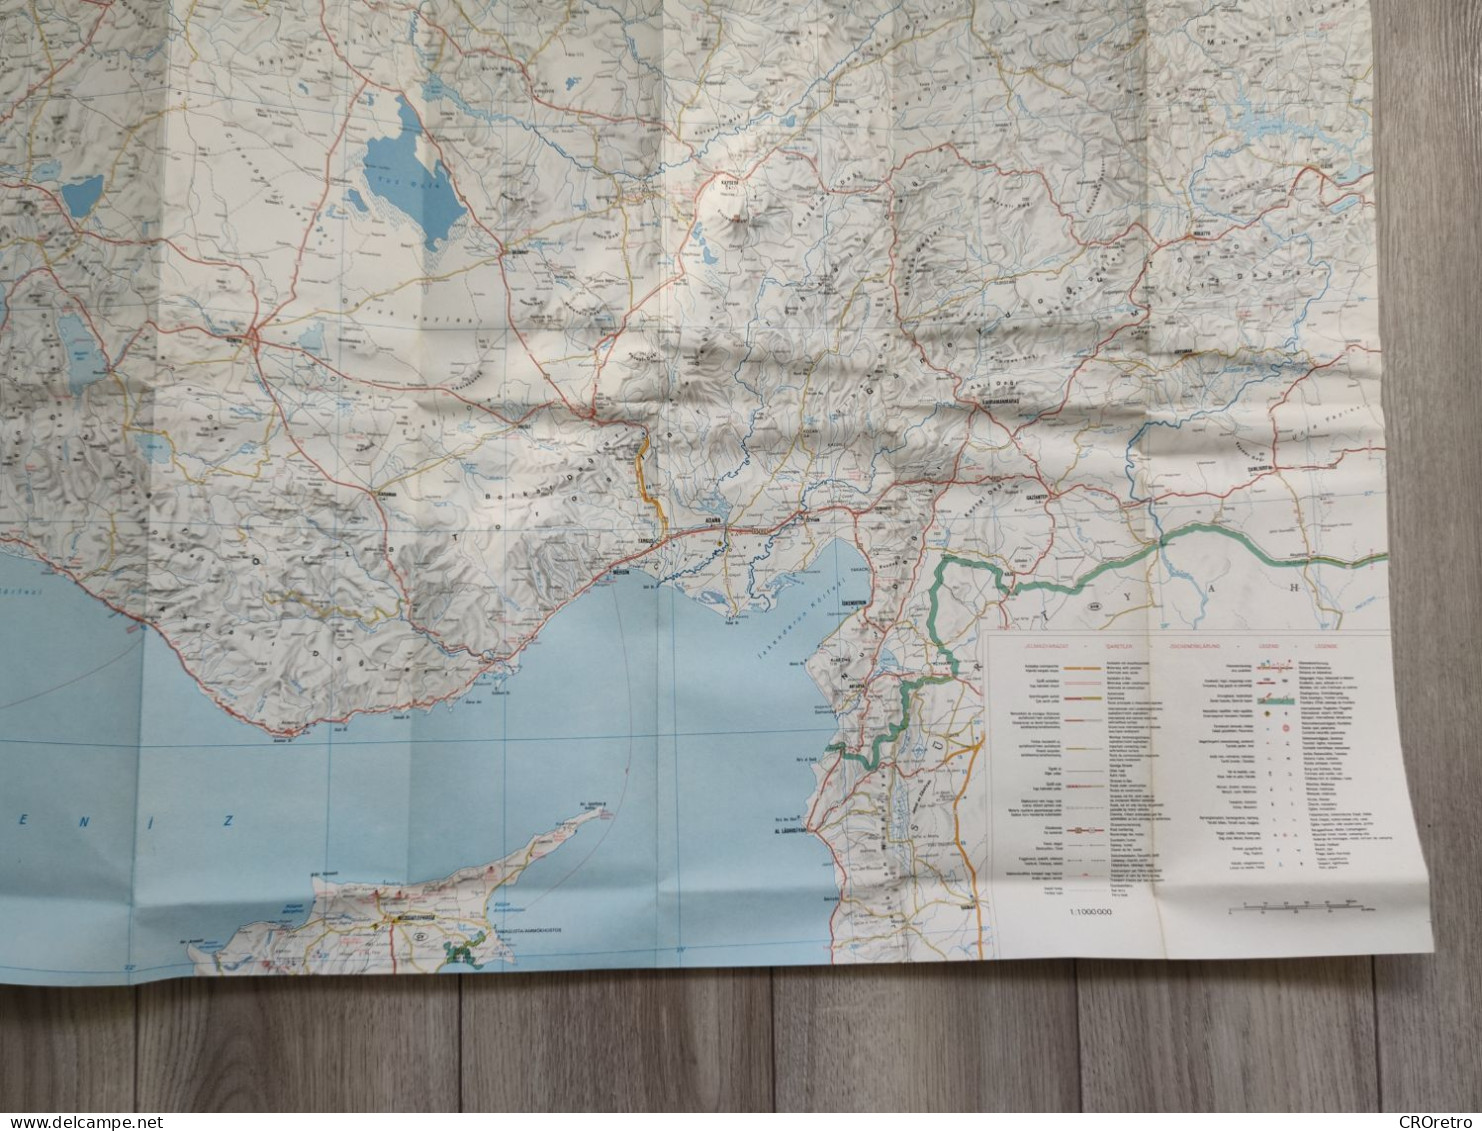 TURKEY / CYPRUS, vintage road map, autokarte, 81×118 cm